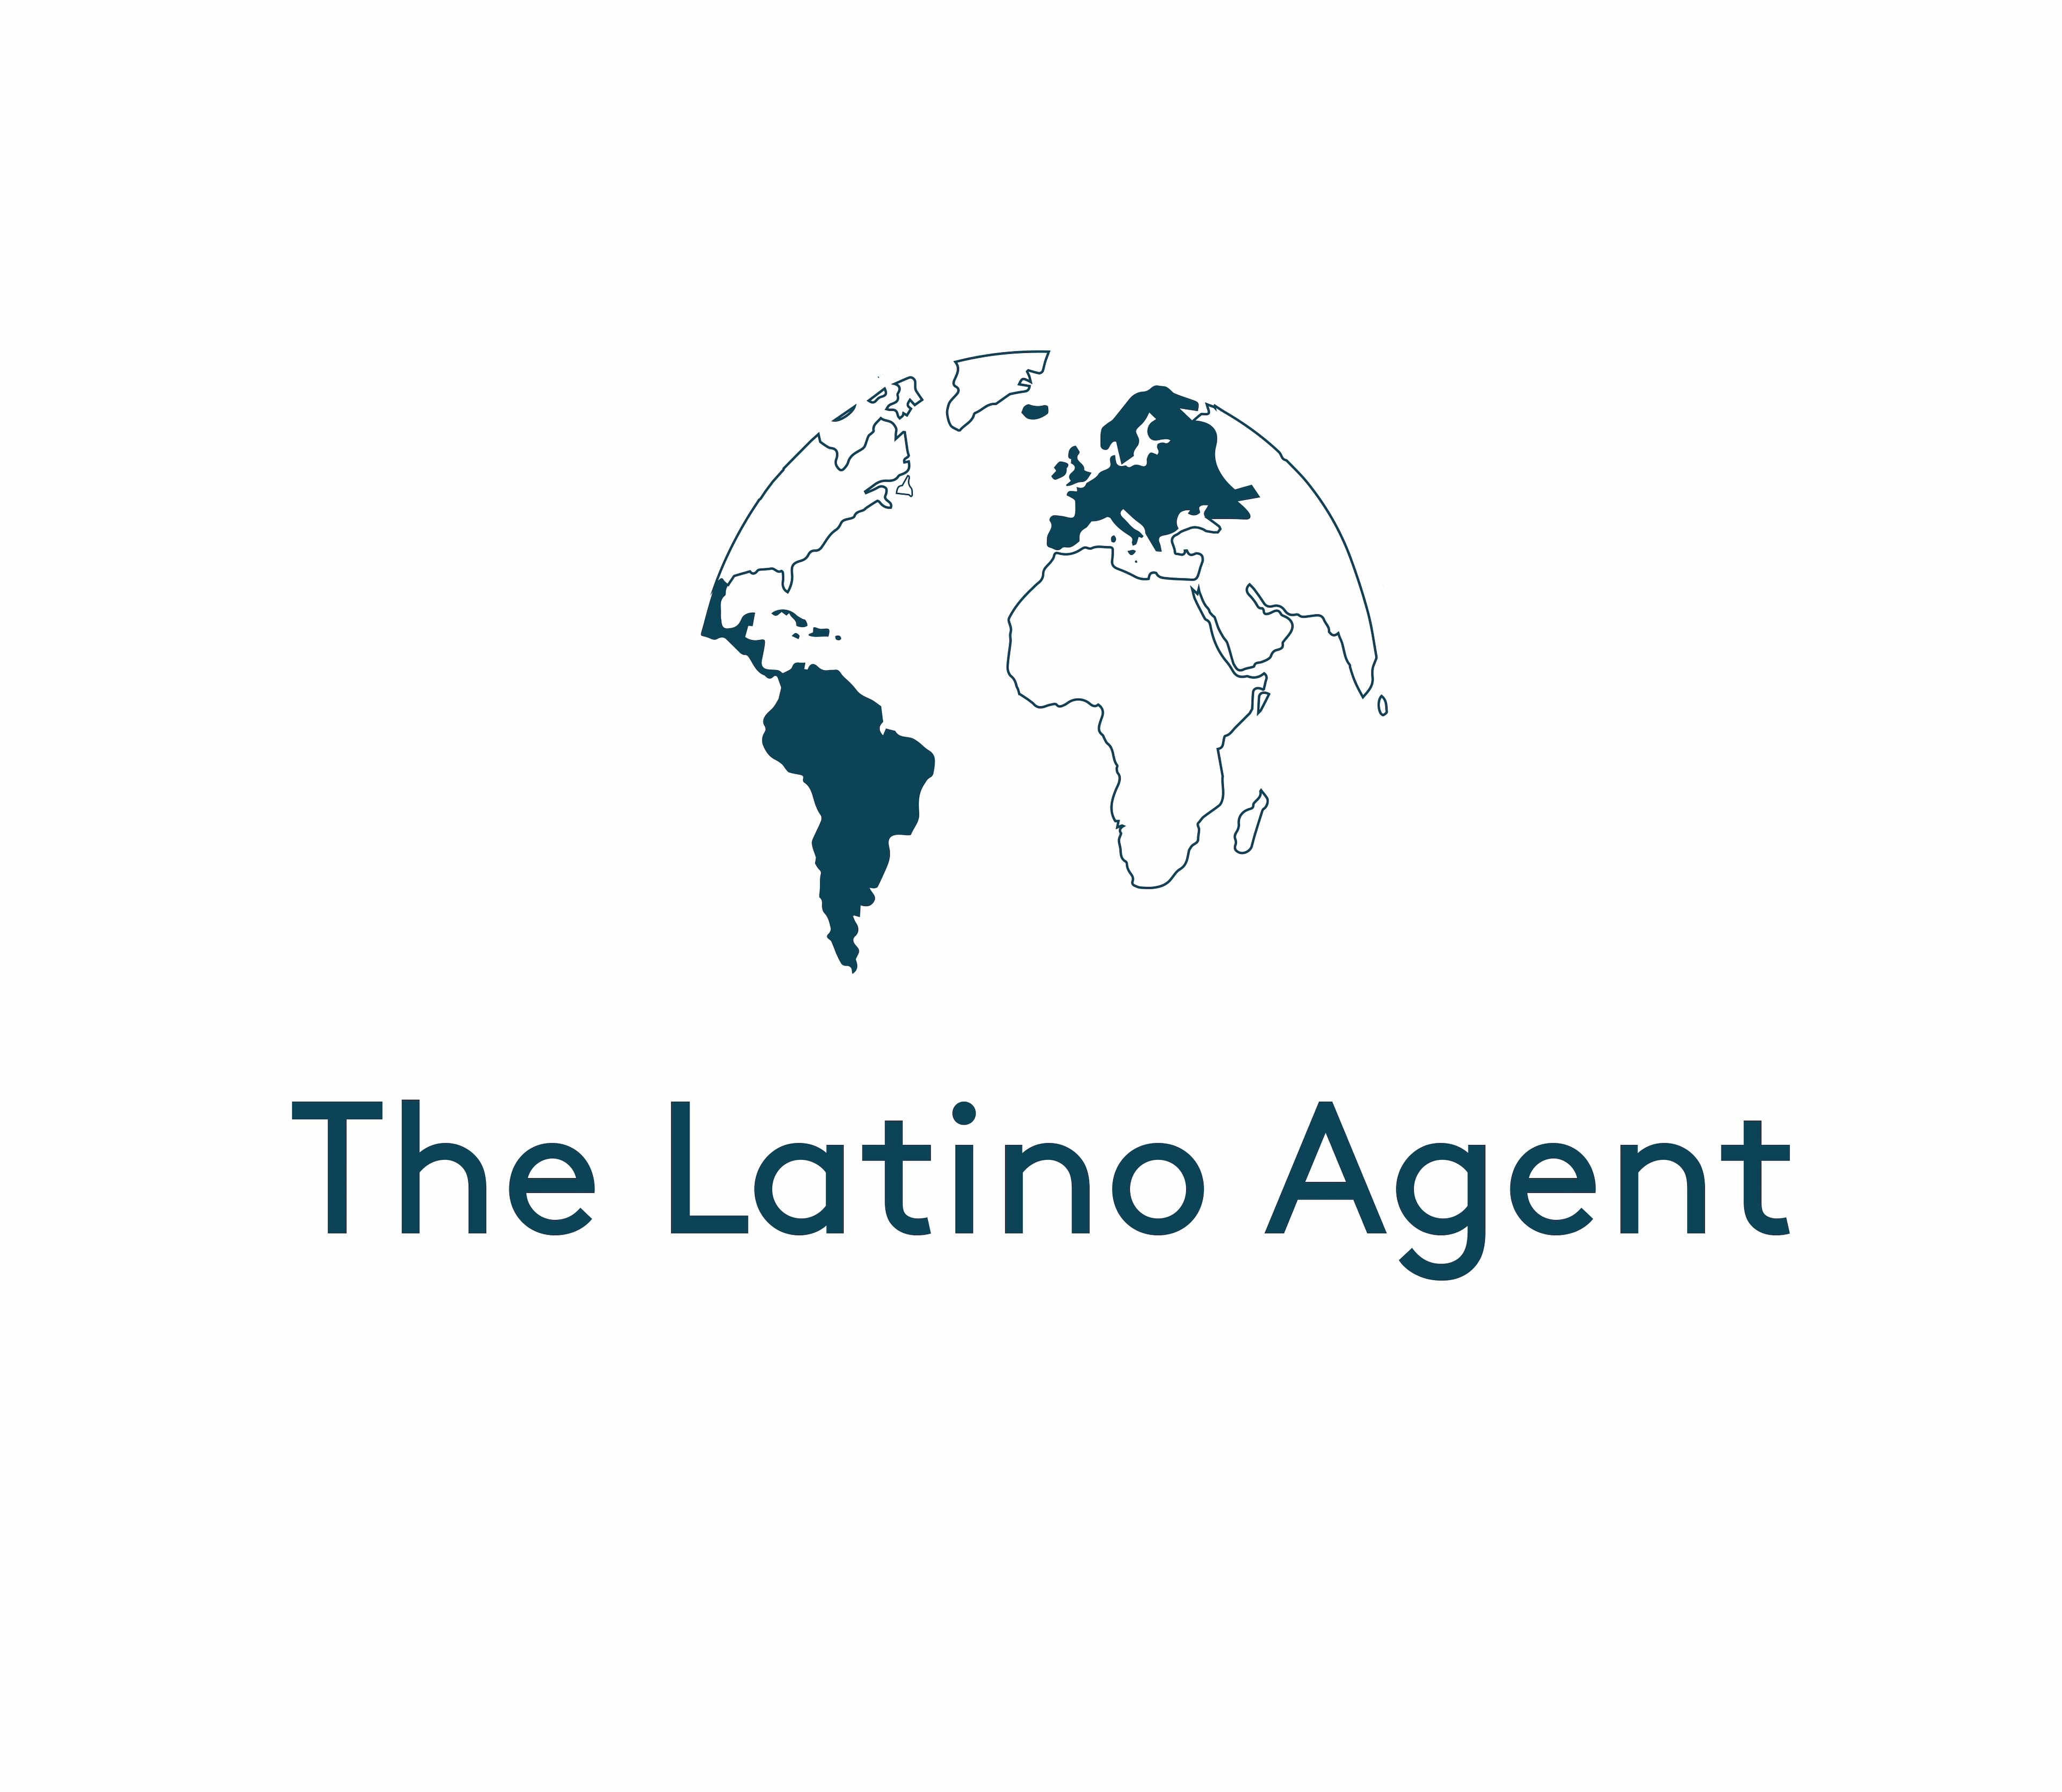 The Latino Agent logo